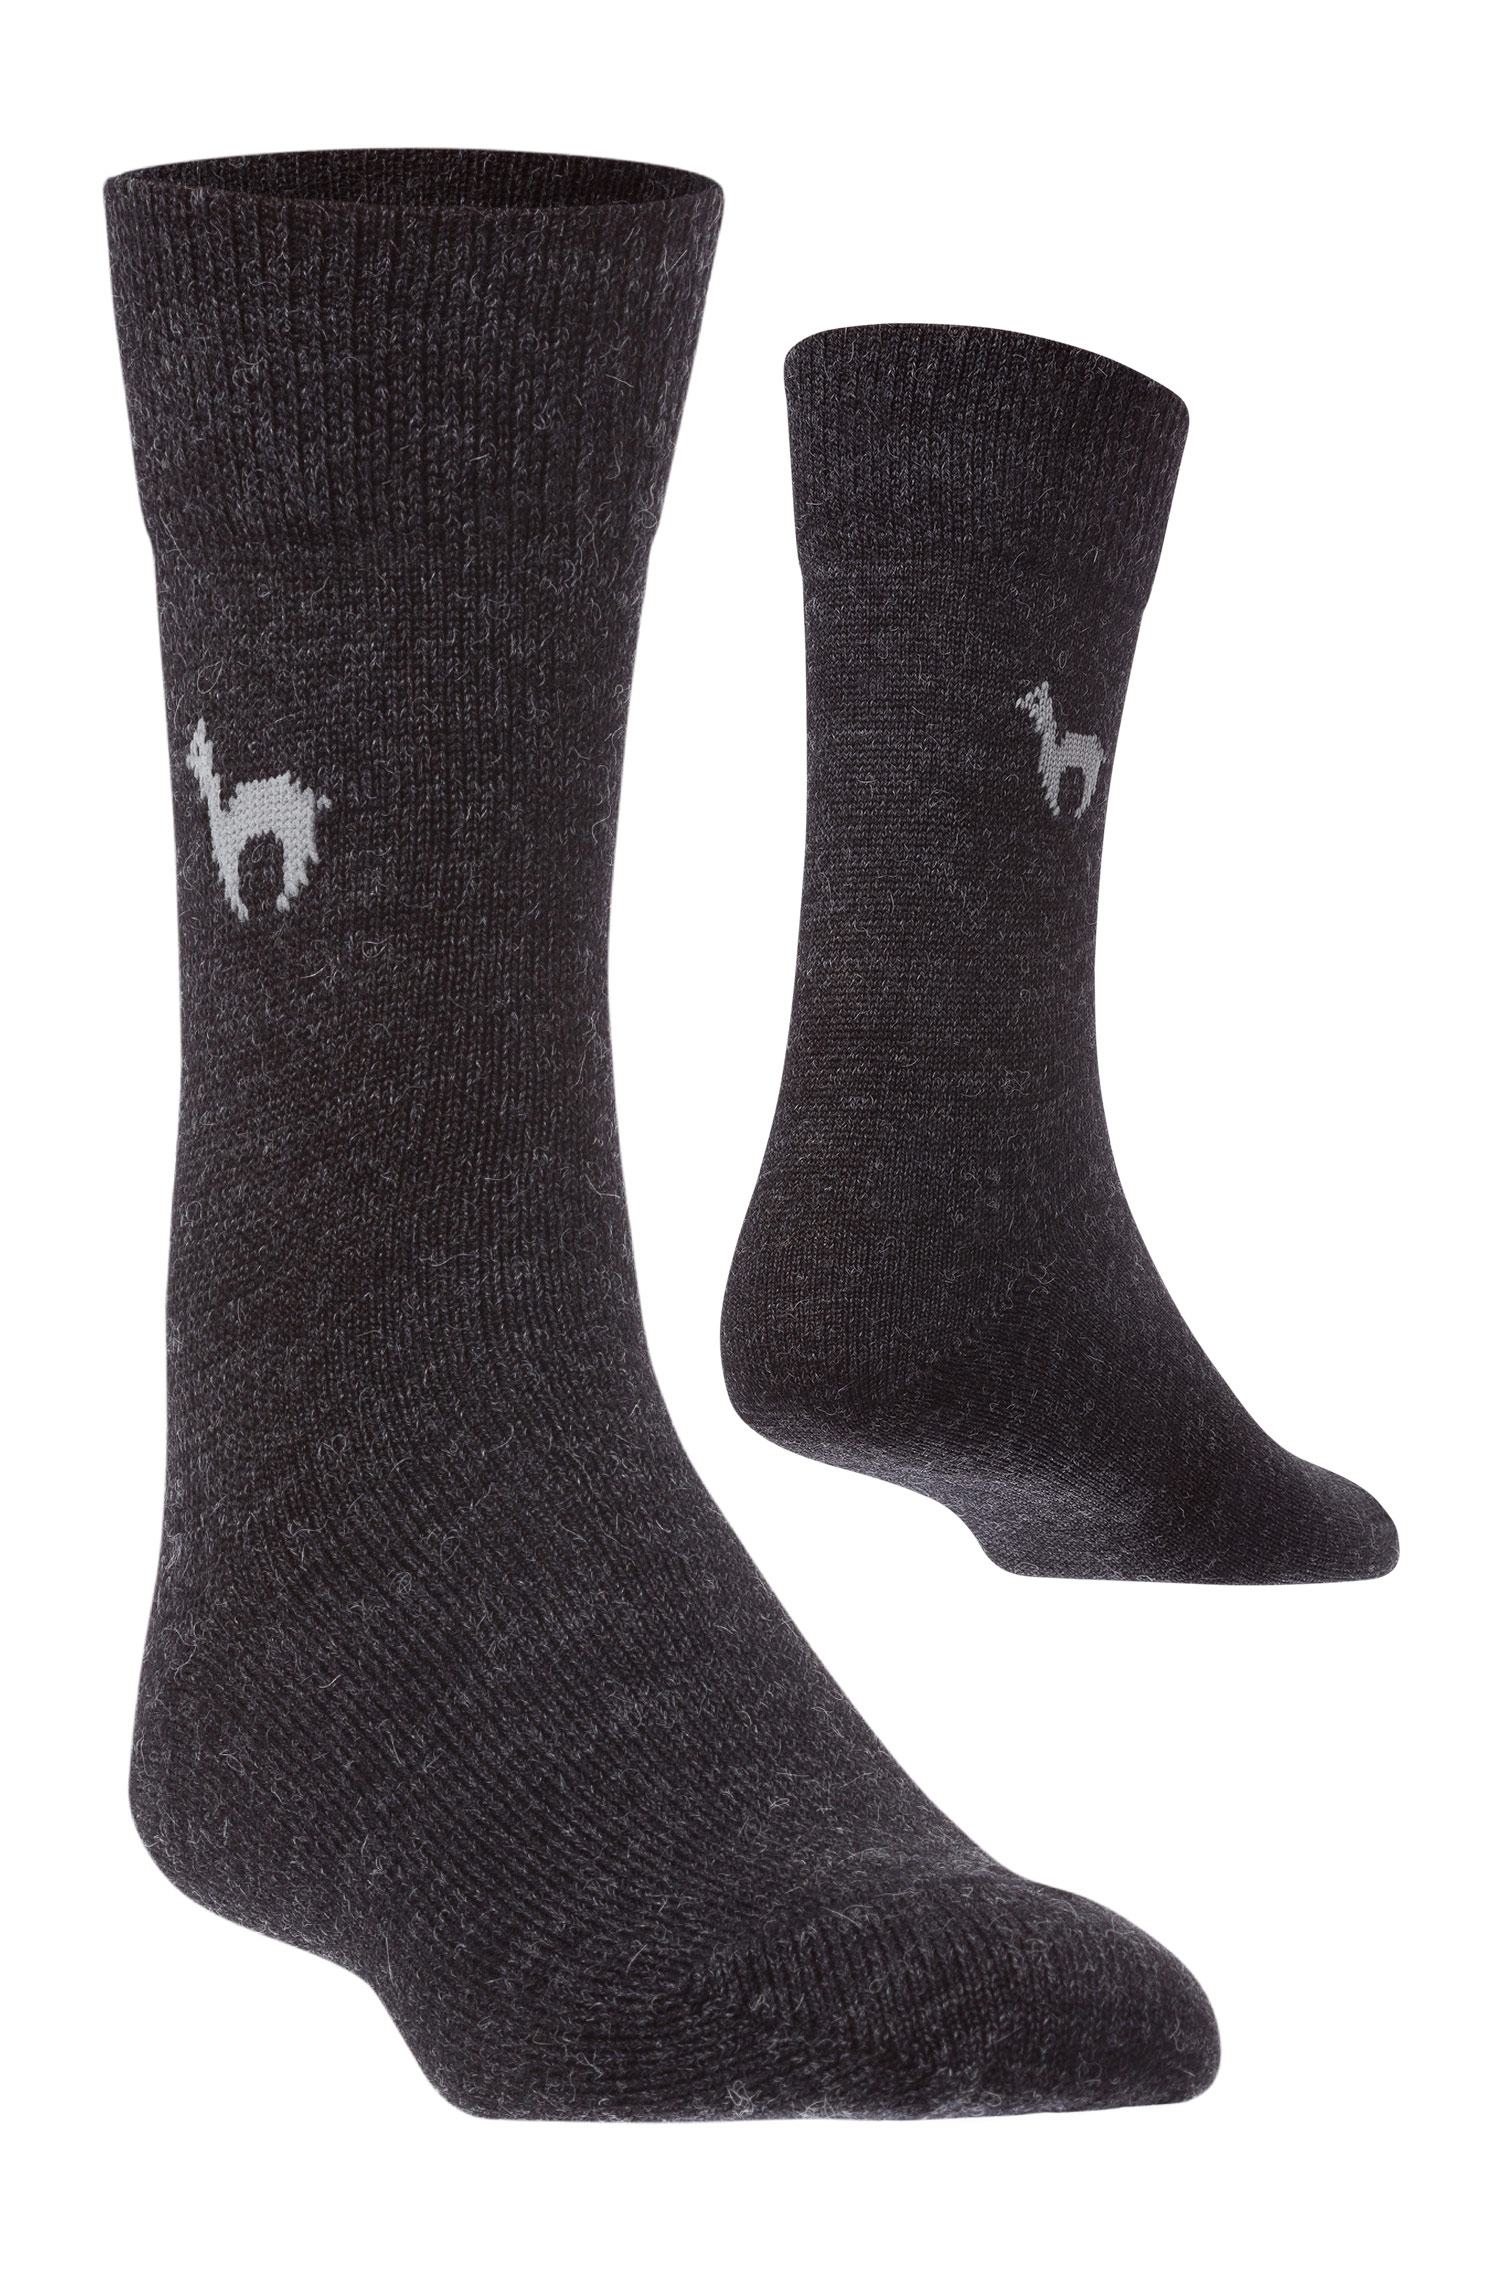 Alpaka Business Socken in dunkelgrauer Farbe